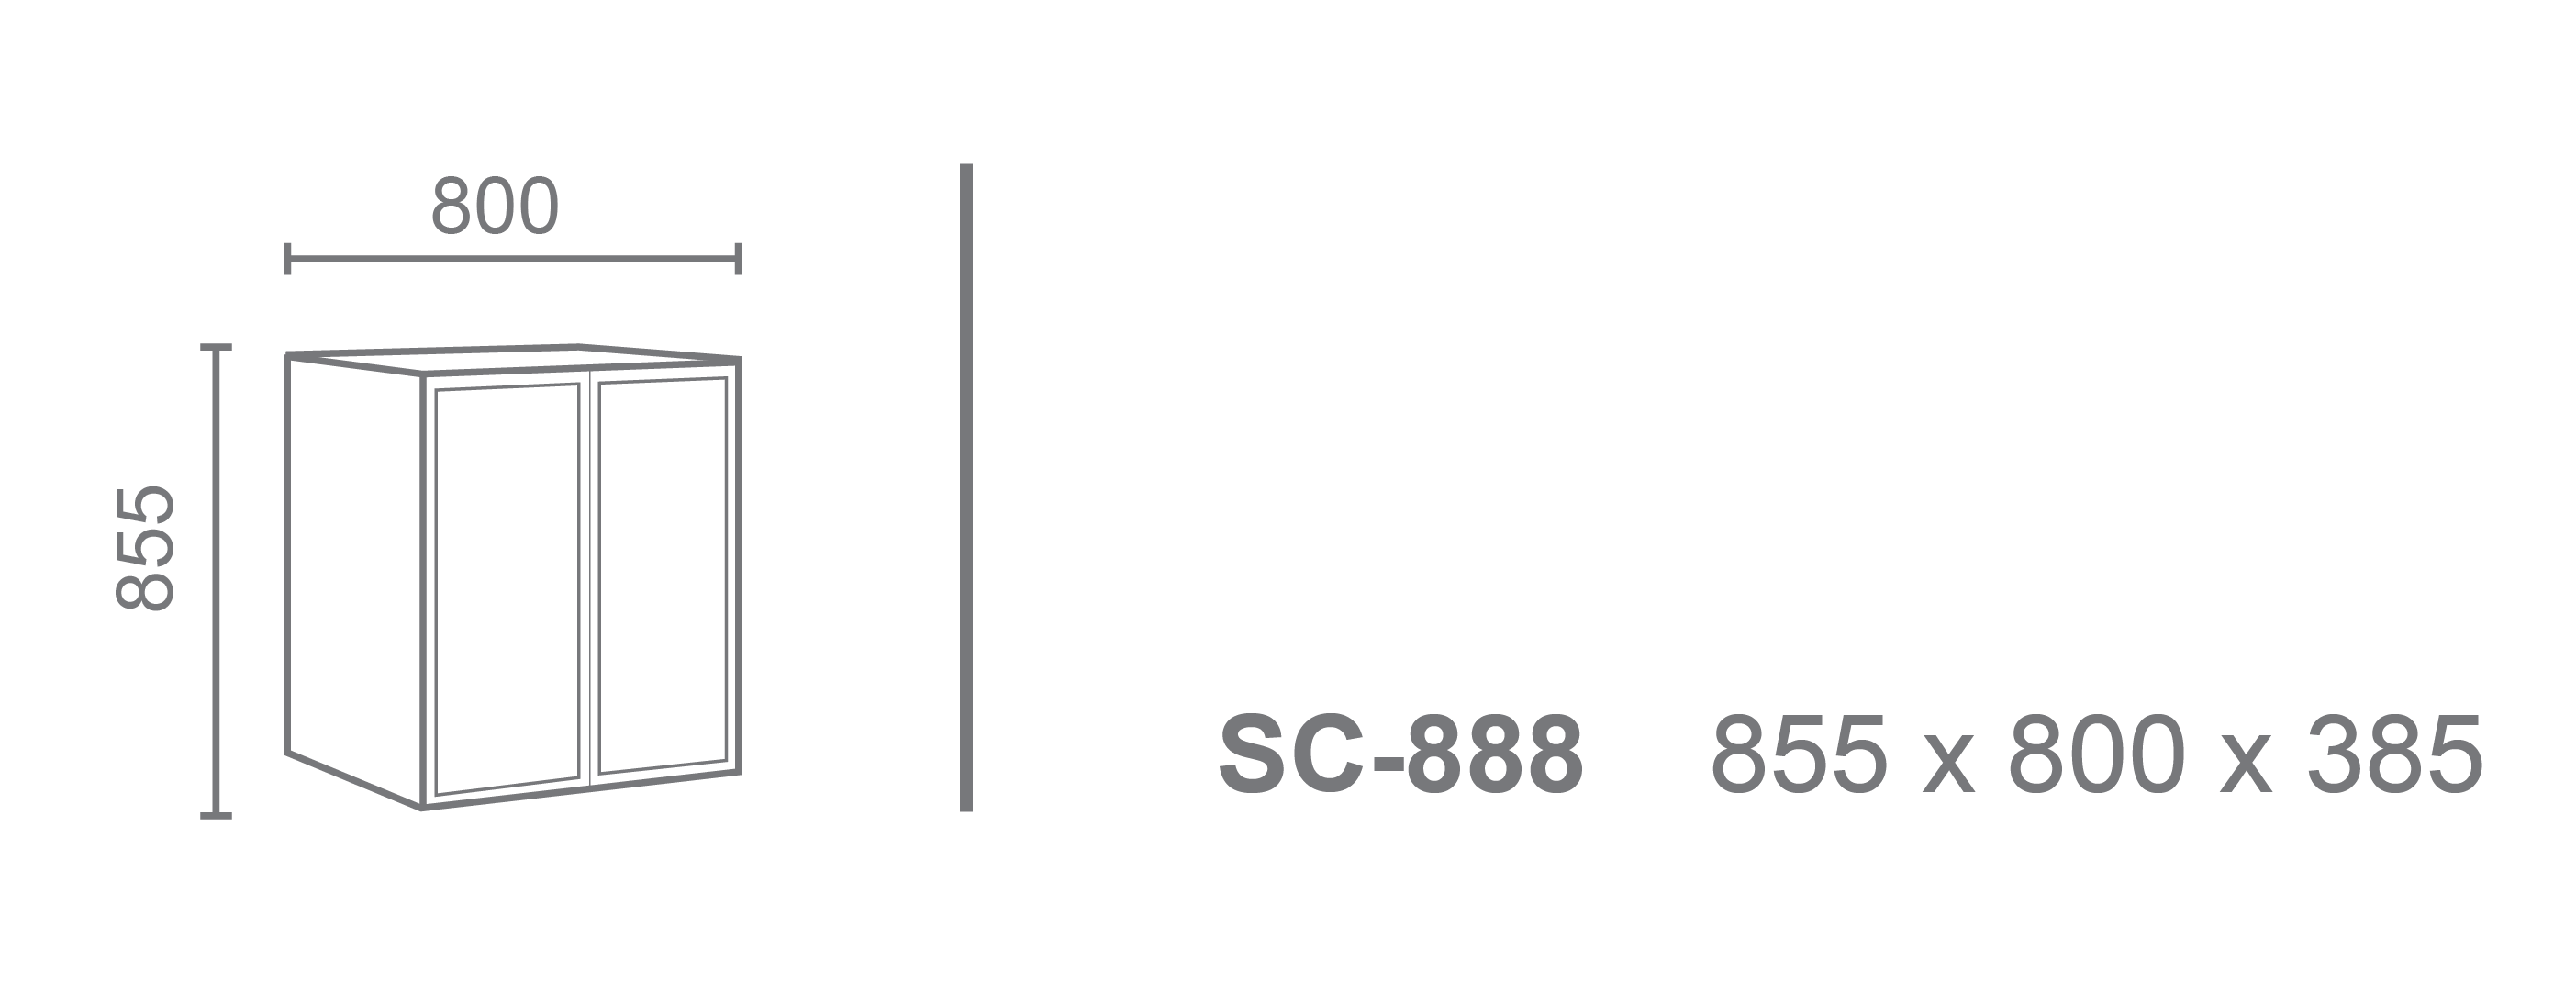 SC-888